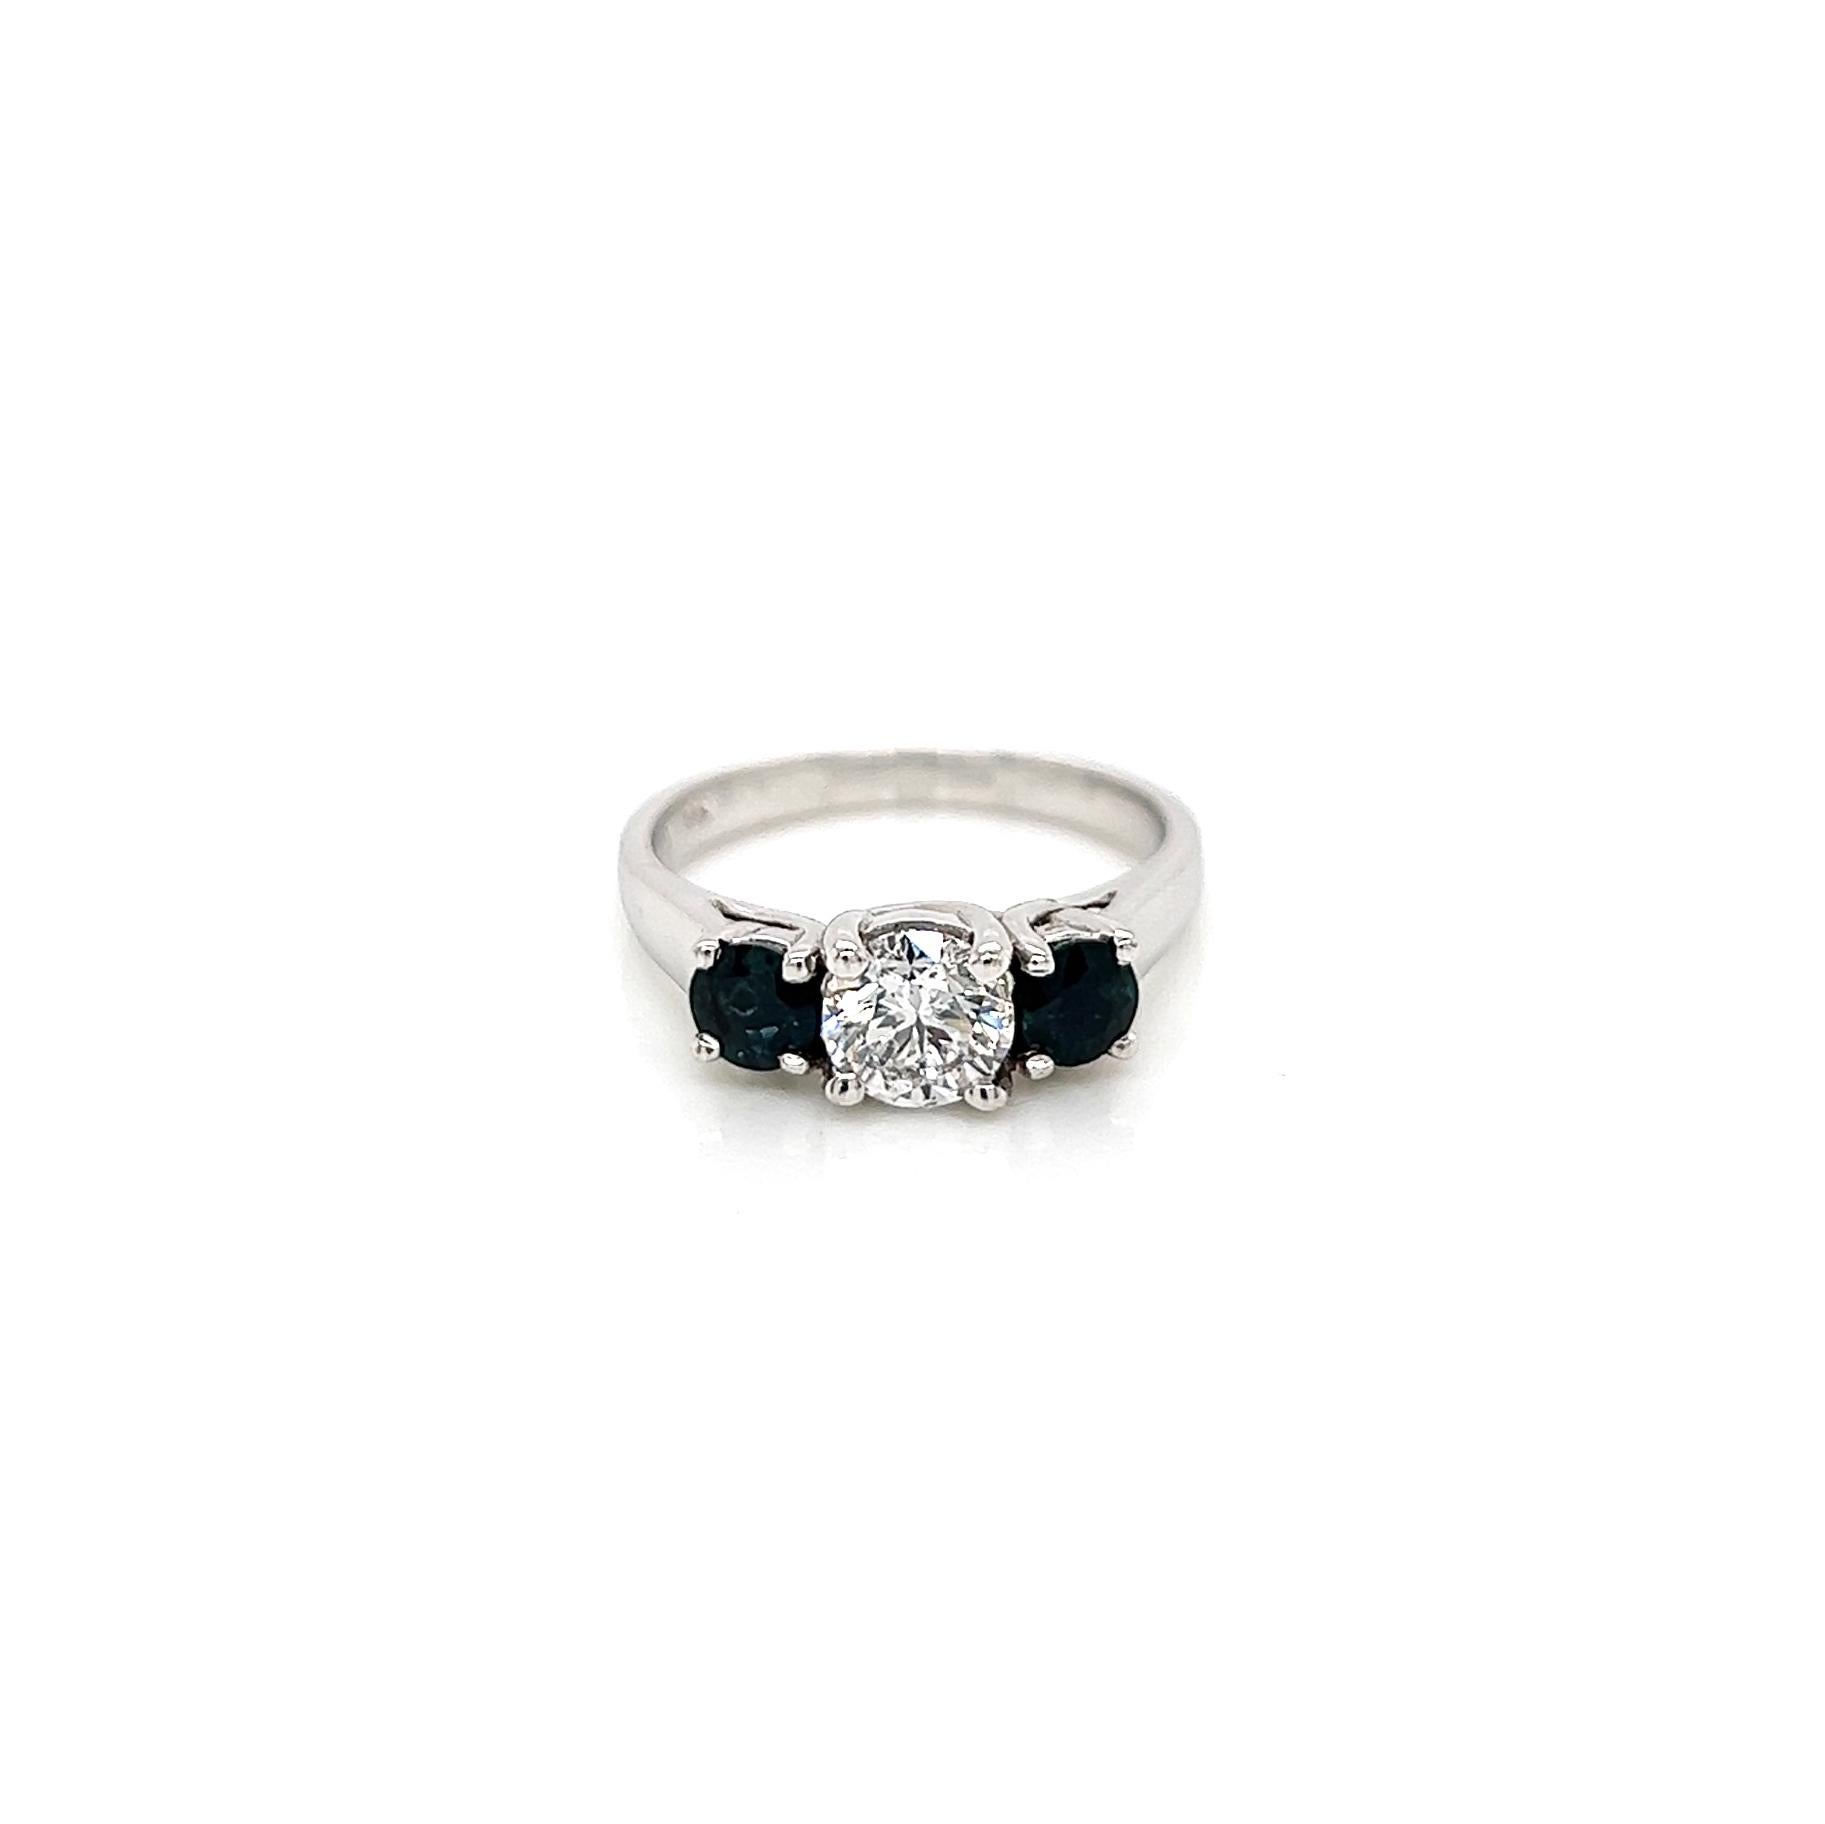 1.39 Total Carat Sapphire Diamond Three Stone Ladies Ring

-Metal Type: 14K White Gold
-0.67Carat Round Blue Sapphire
-0.72Carat Round Natural Center Stone 
-Size 6.25

Made in New York City